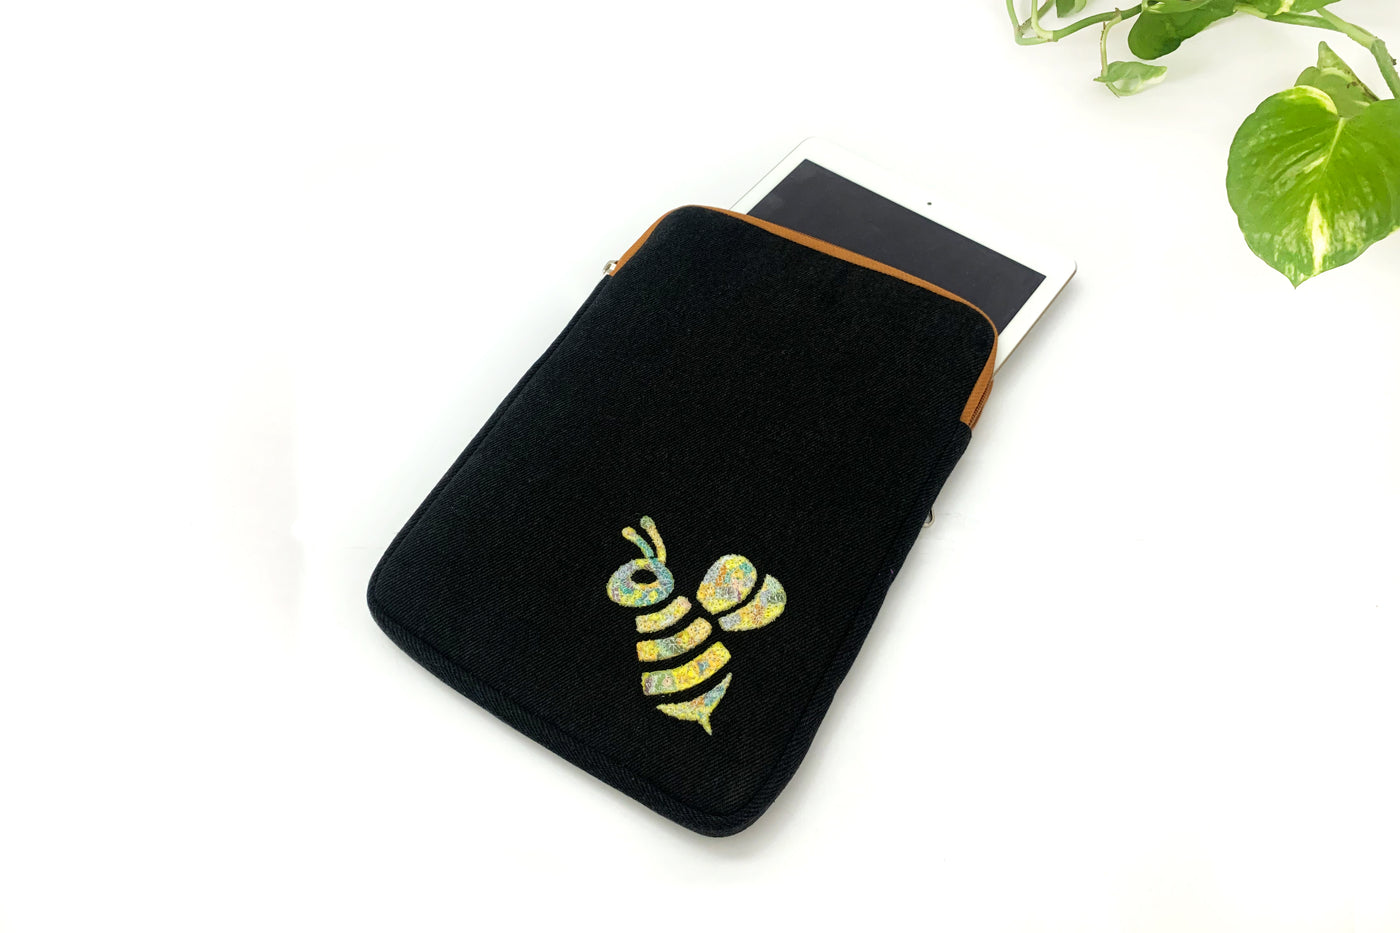 The Honey Bee Tablet Sleeve